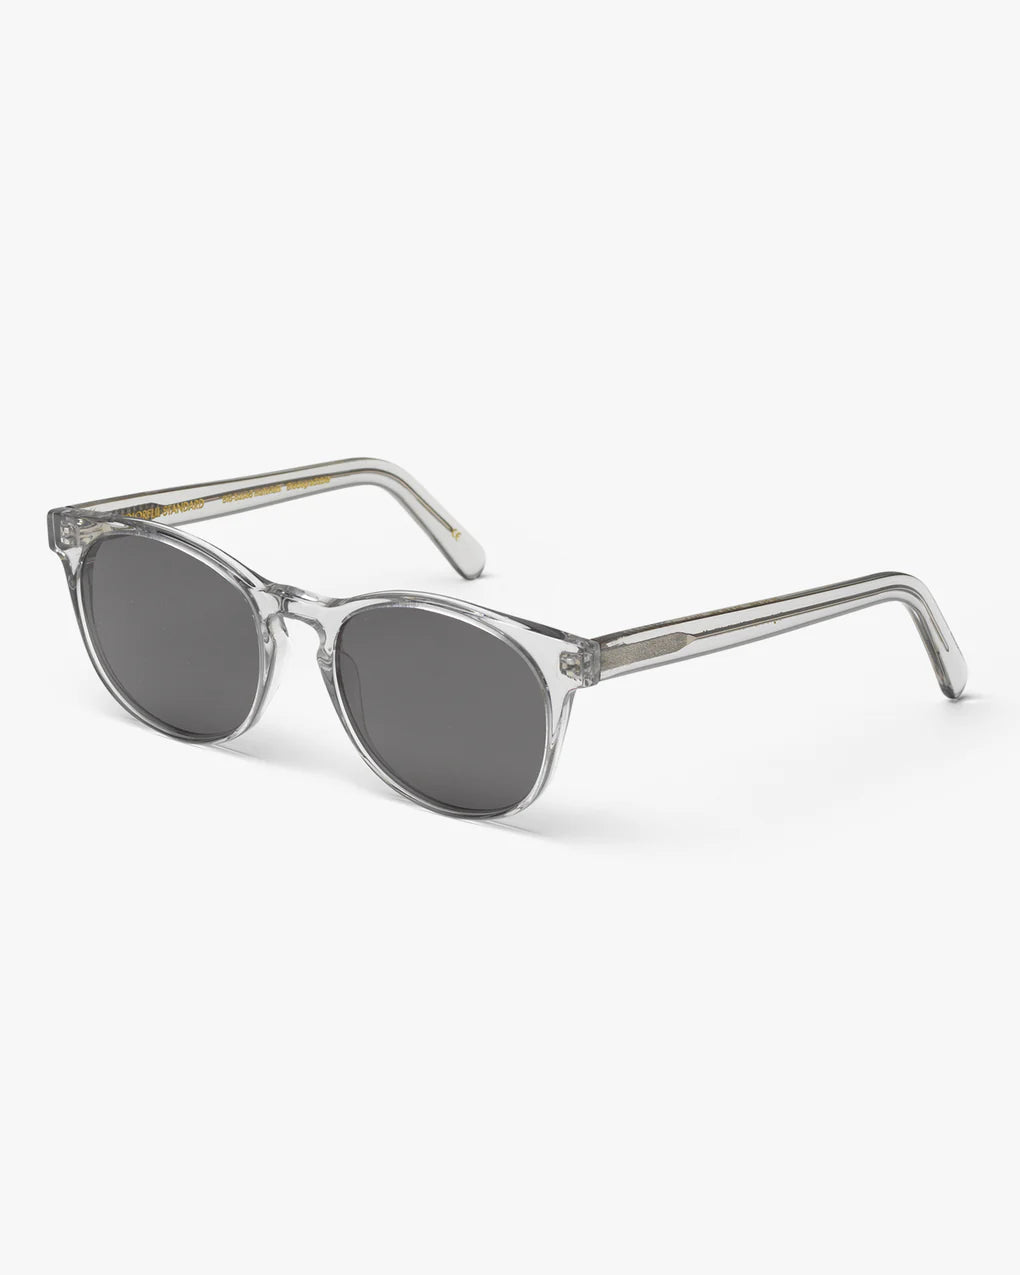 Storm Grey Sunglasses